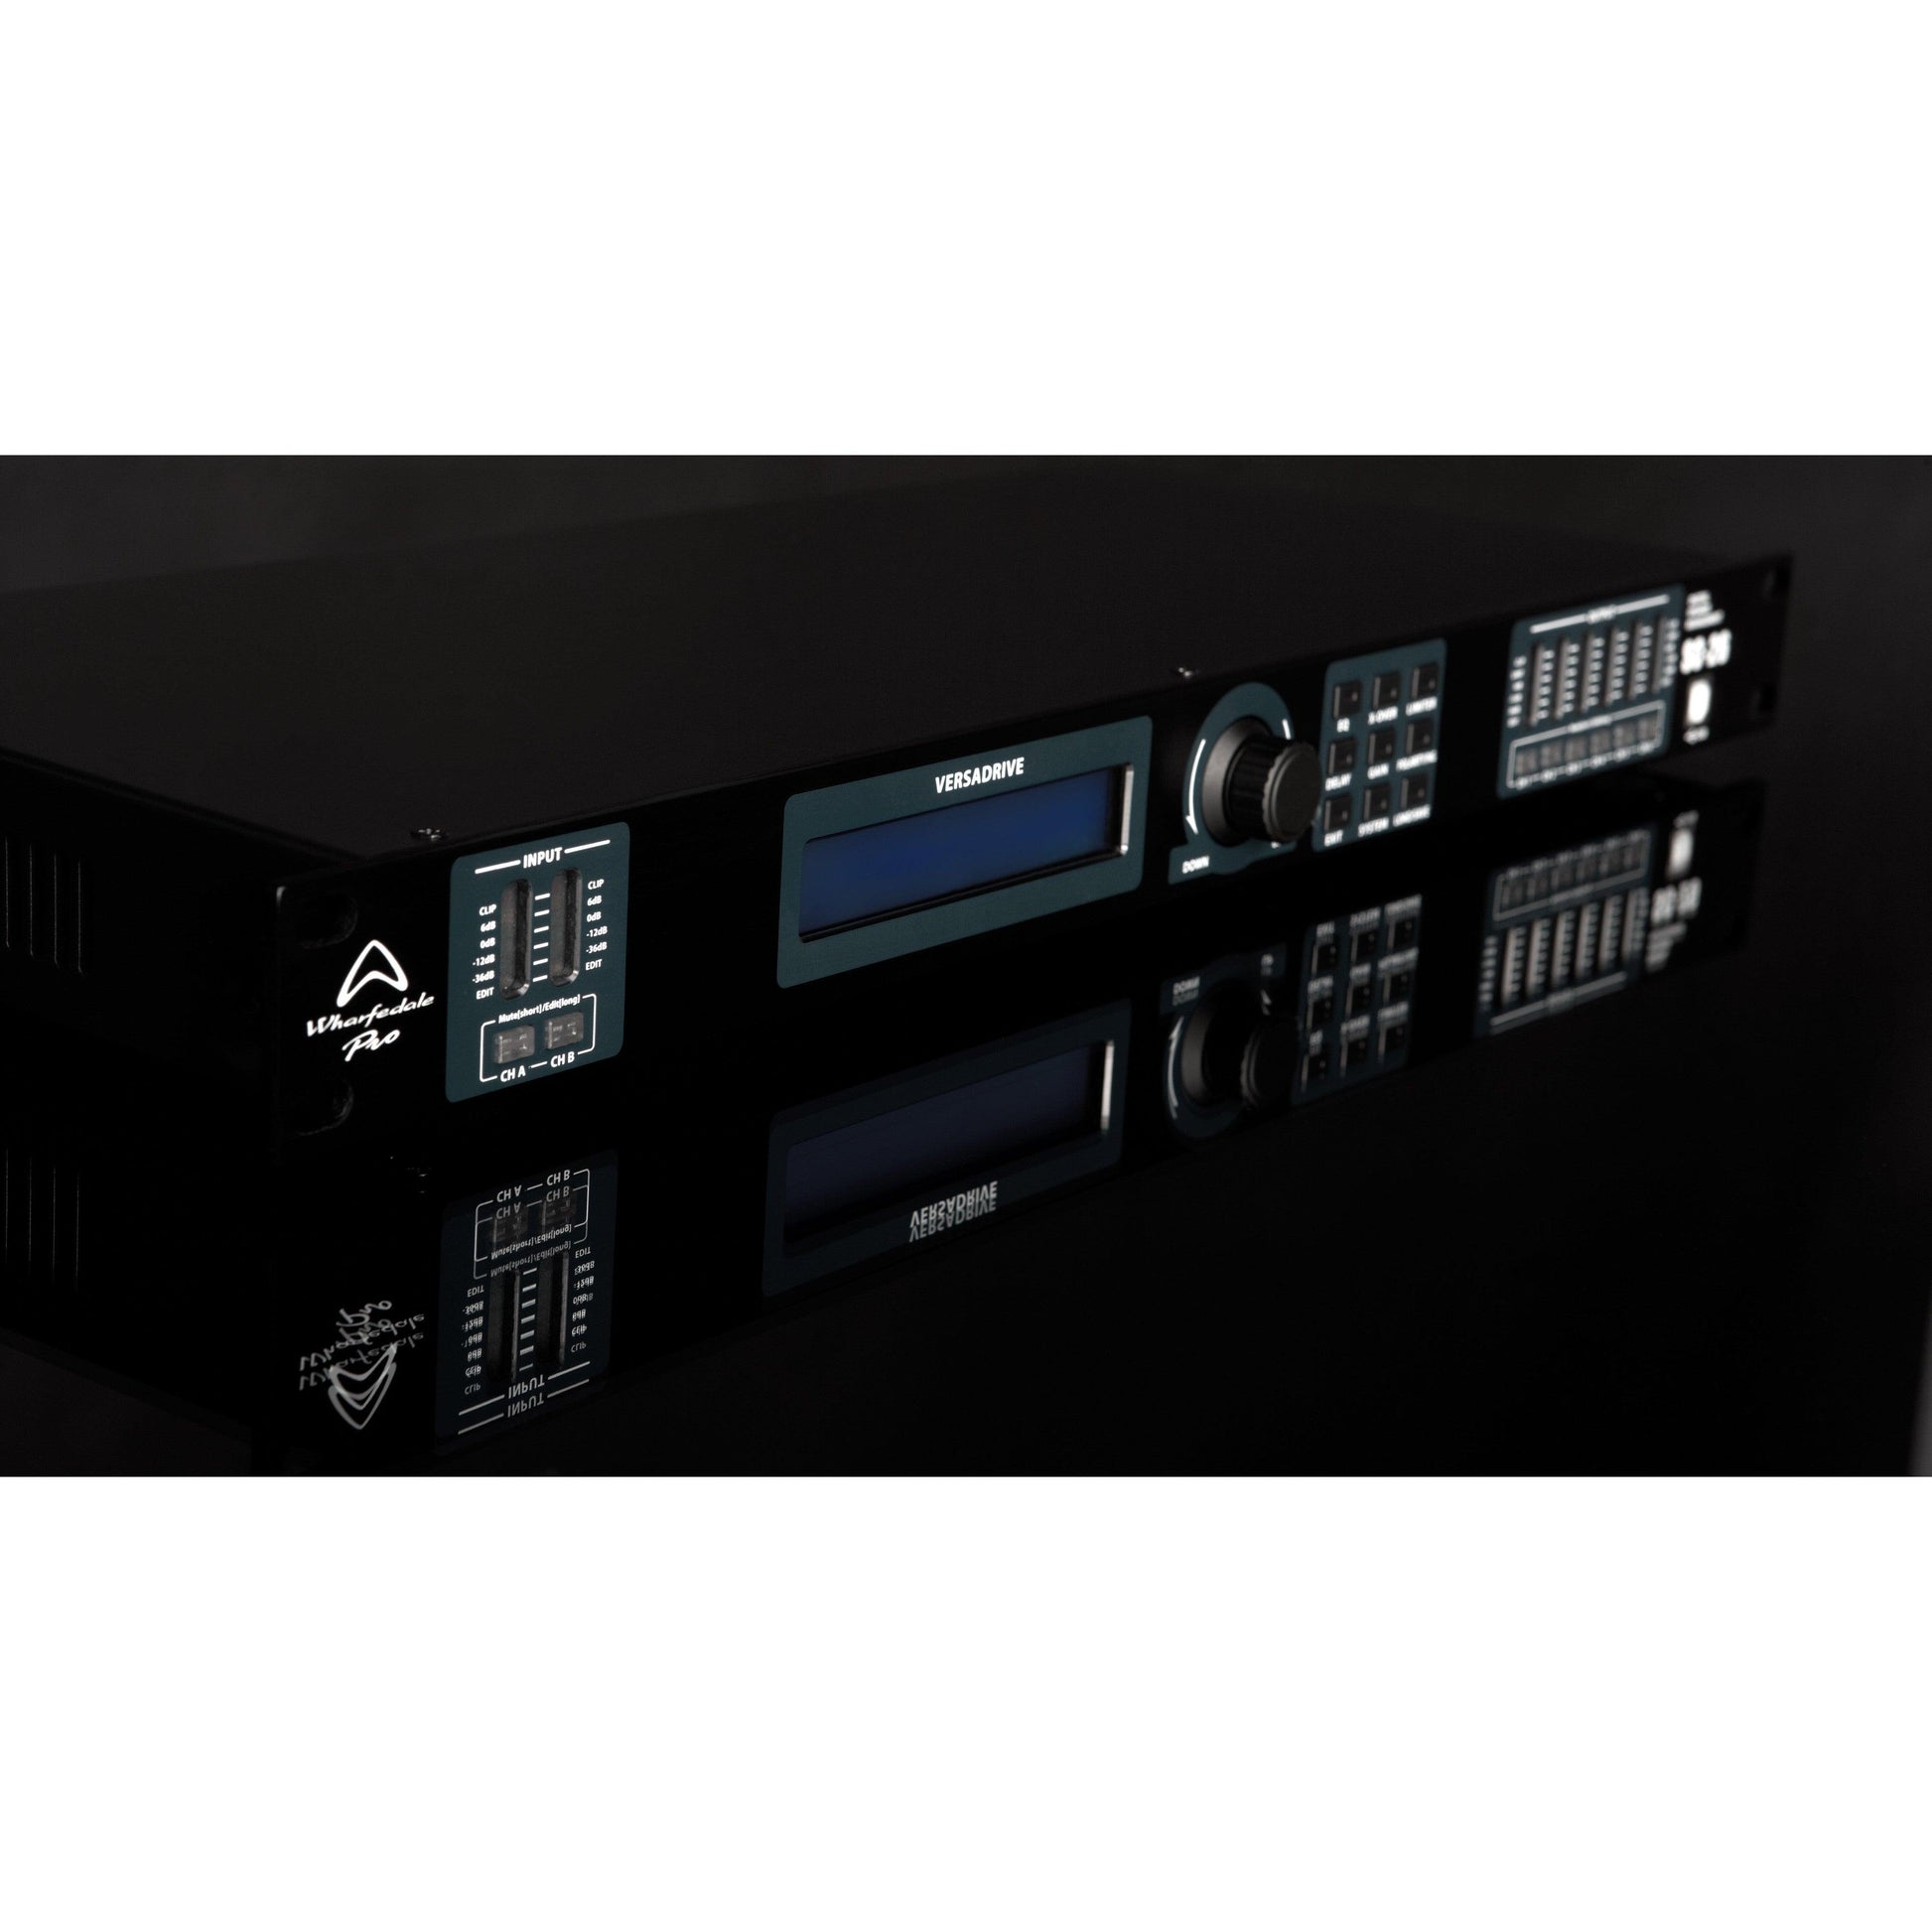 Wharfedale Pro SC26 Versadrive Speaker Management System w/ 2 x XLR inputs and 6 x XLR outputs